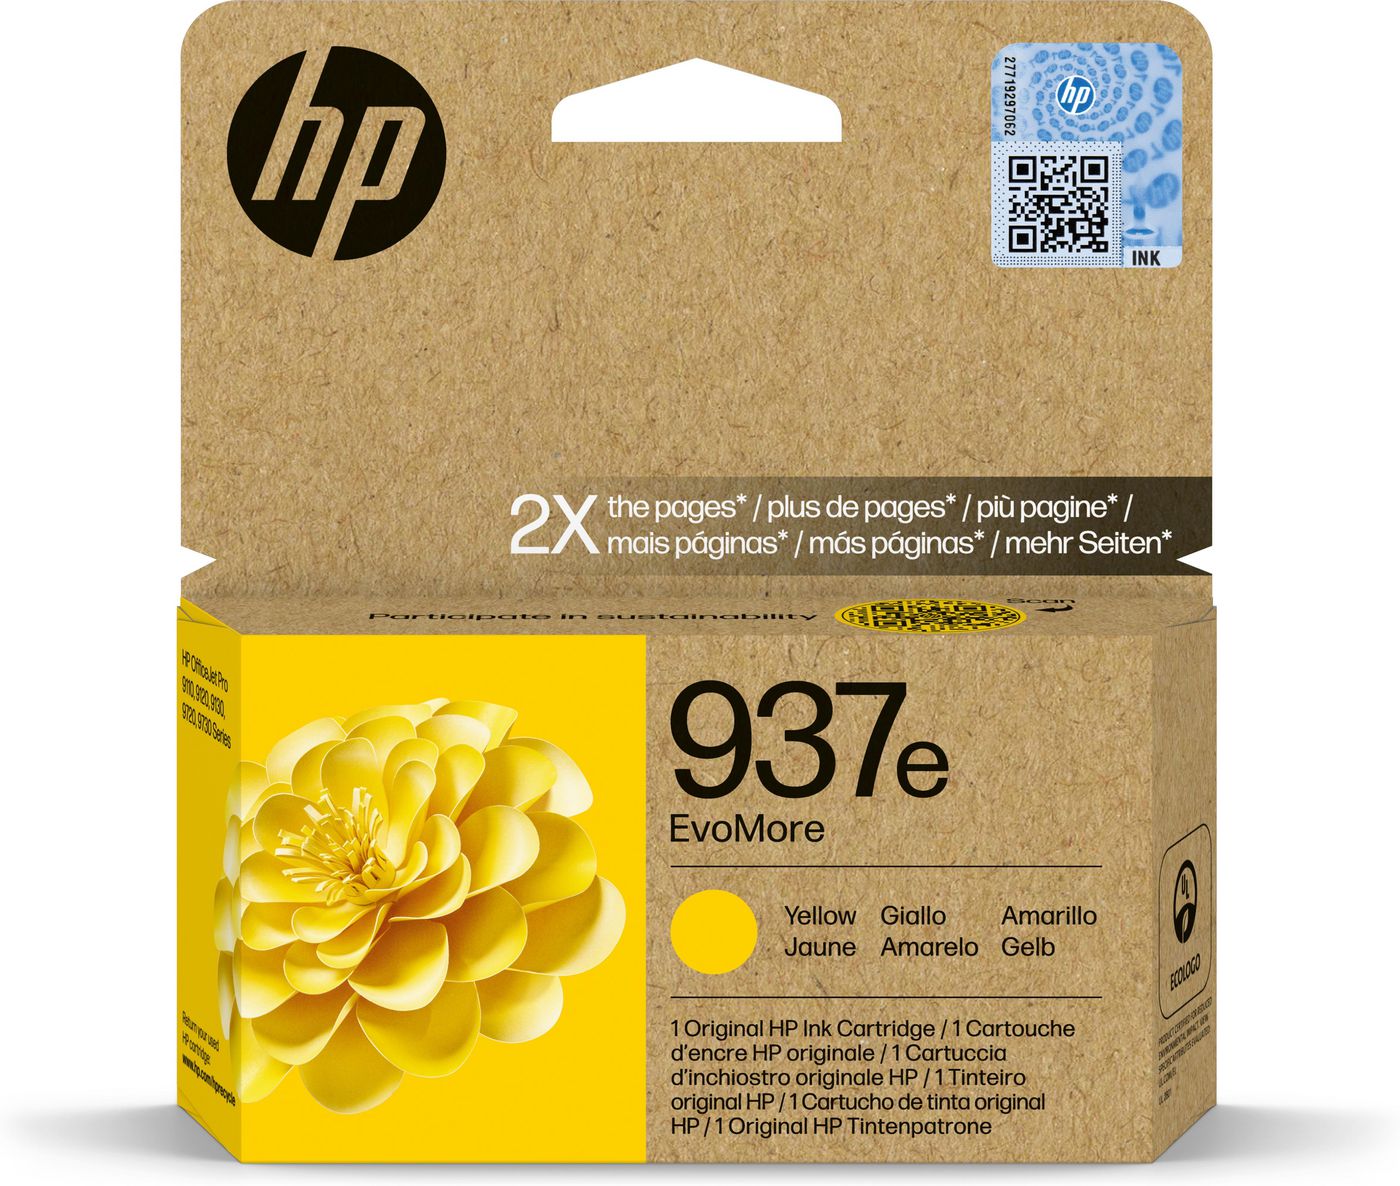 HP EvoMore 4S6W8NE Tintenpatrone yellow No. 937e